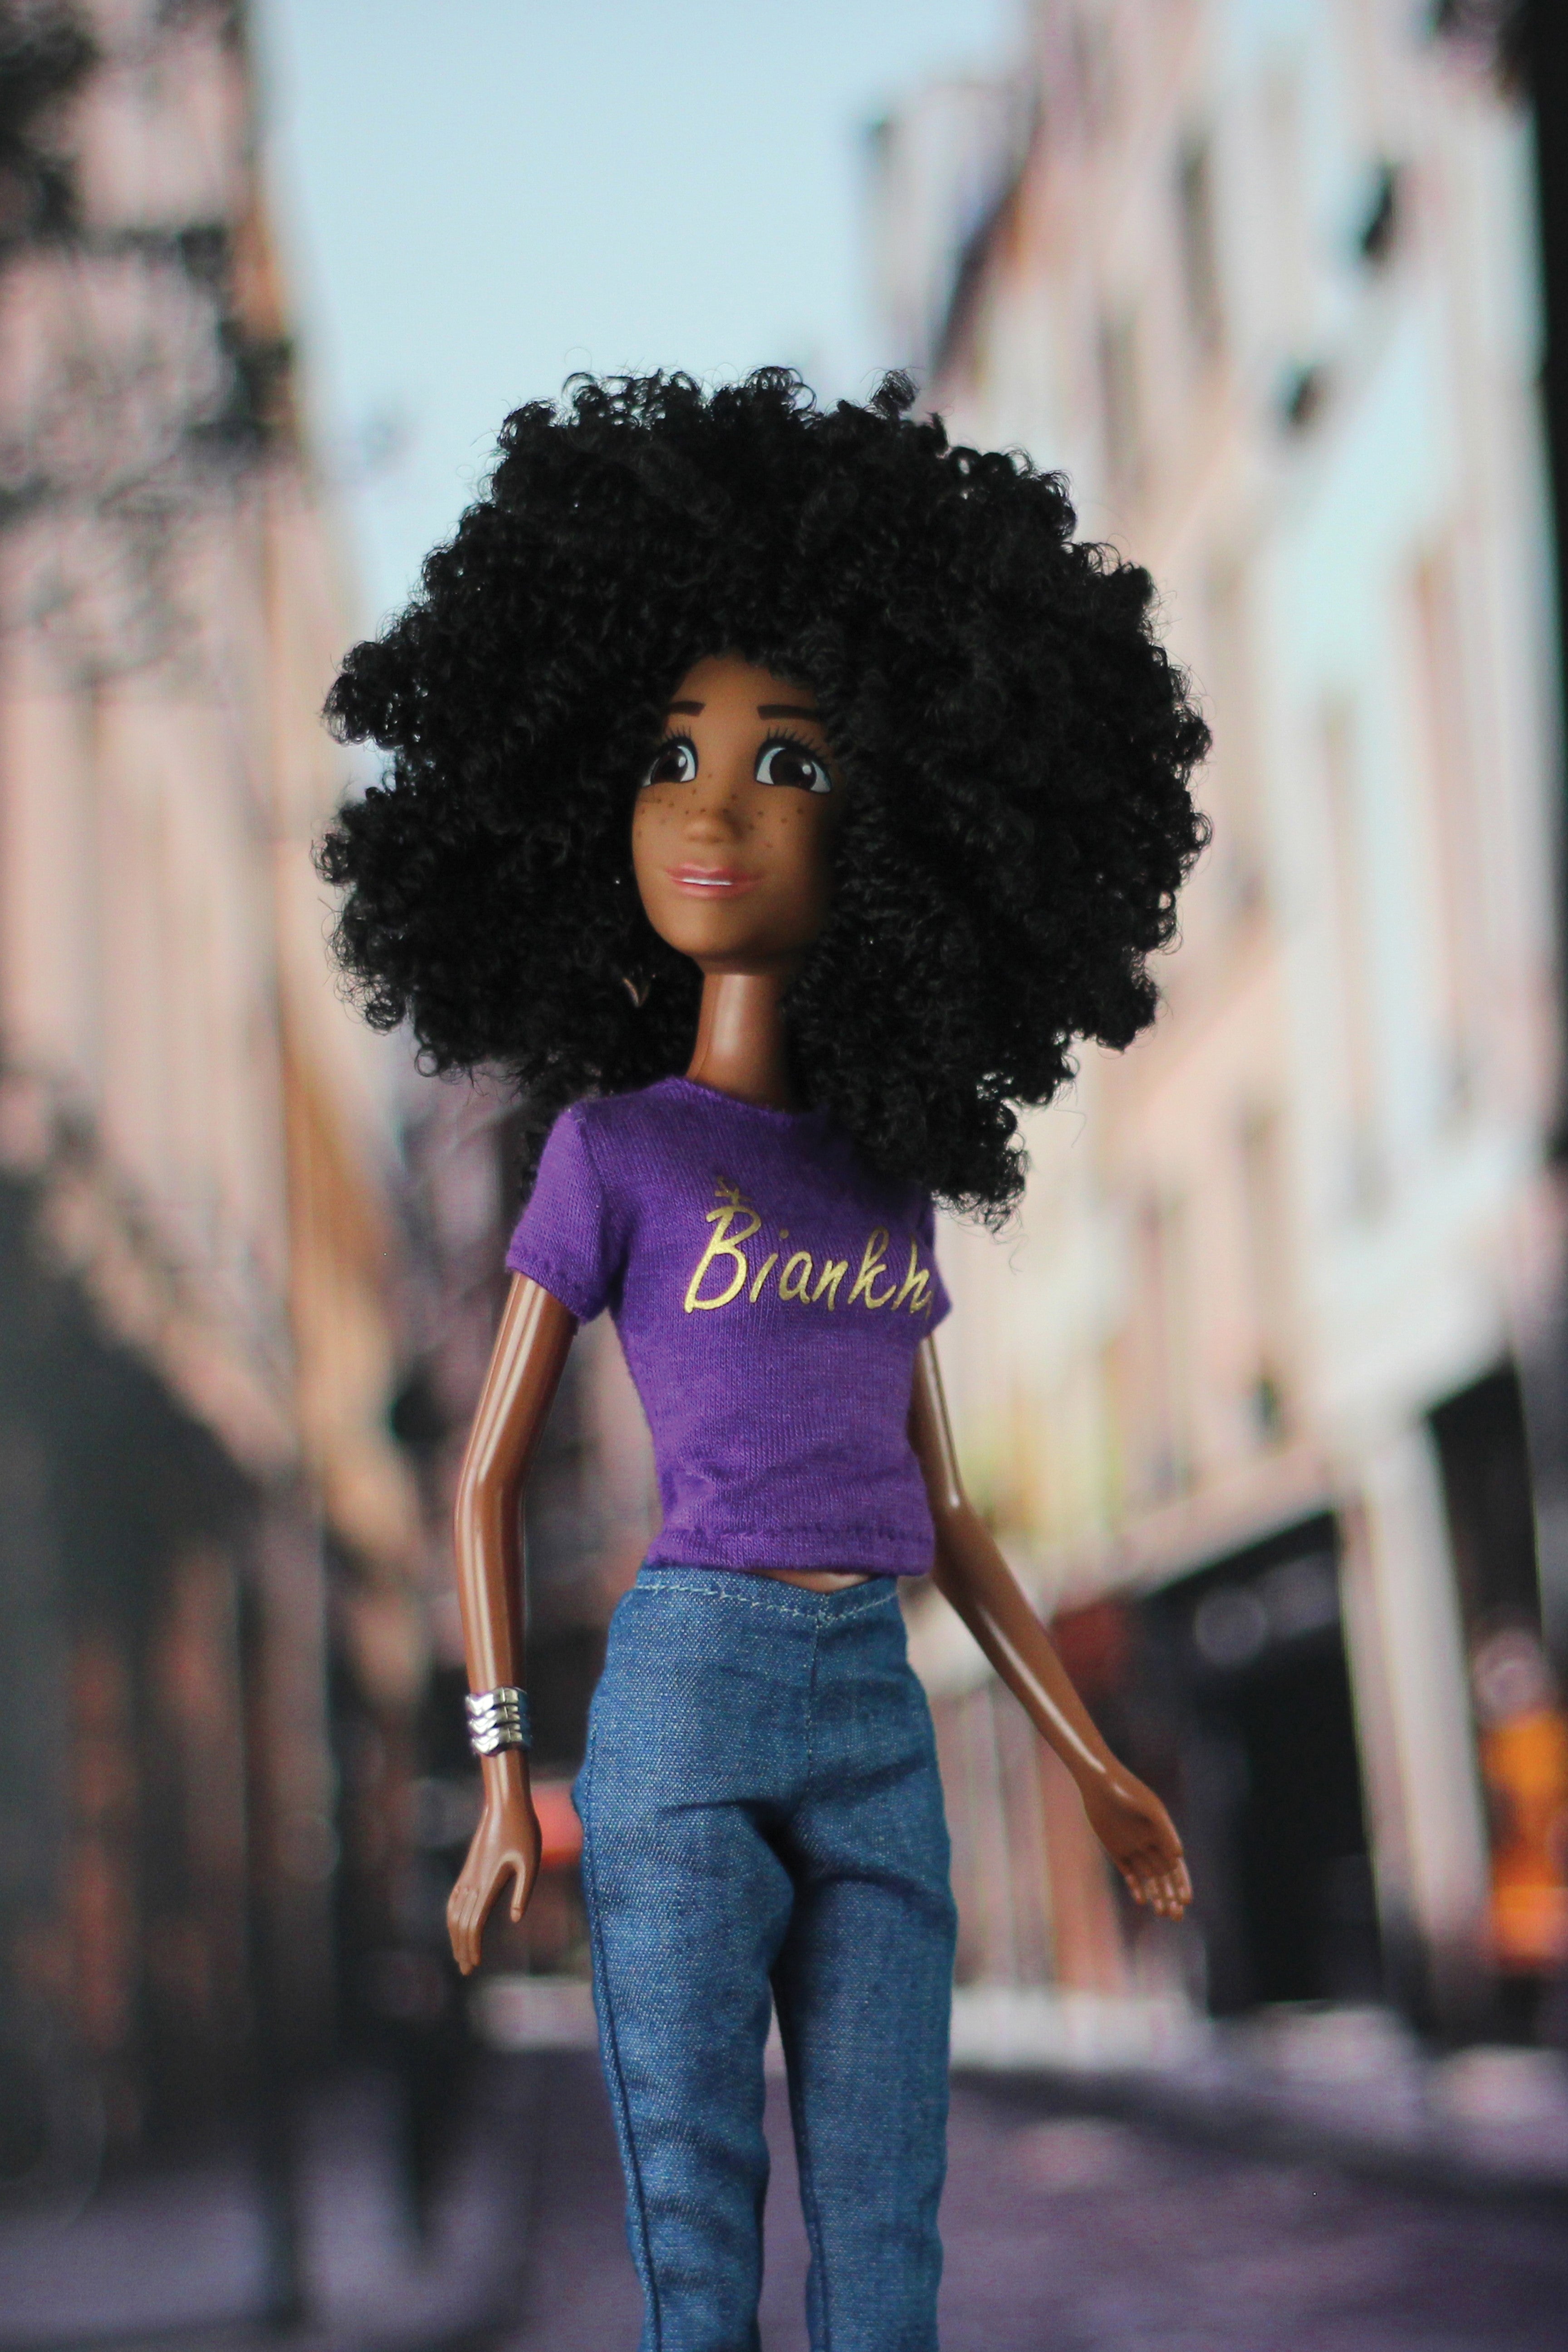 Embracing Diversity: The Importance of Black Dolls in Children's Development